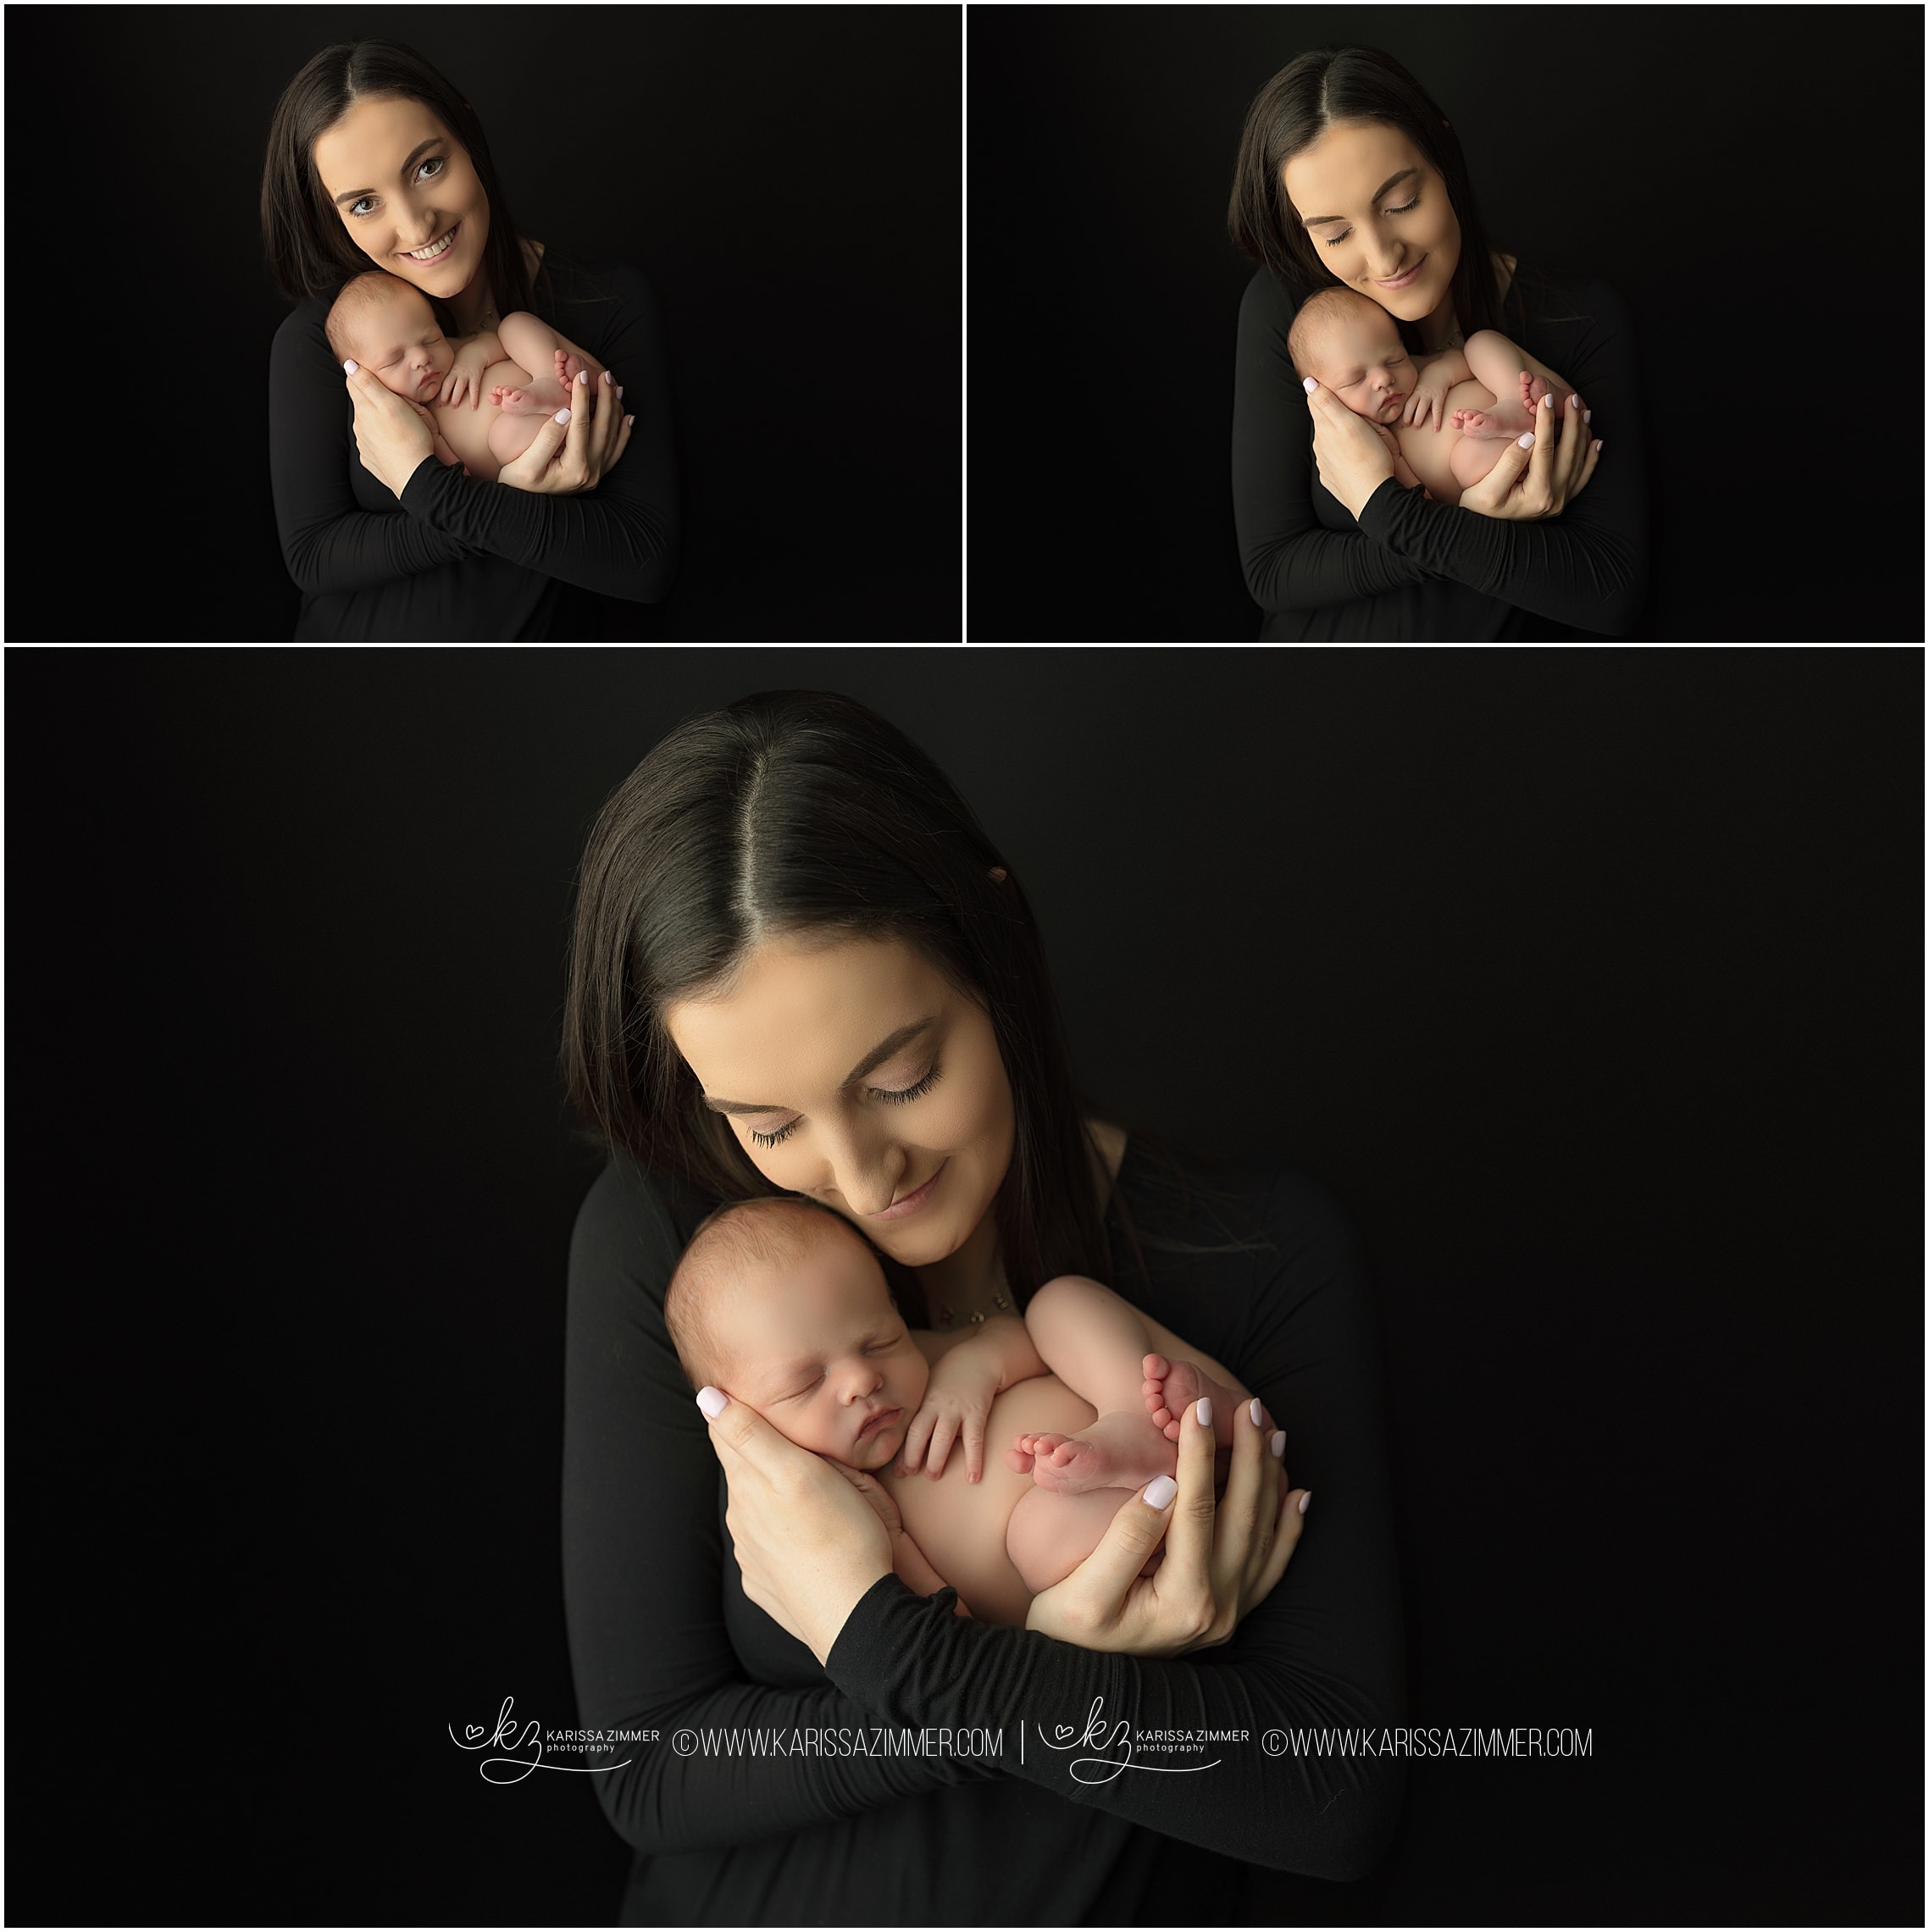 mother and newborn son photos near Hershey PA newborn photography studio